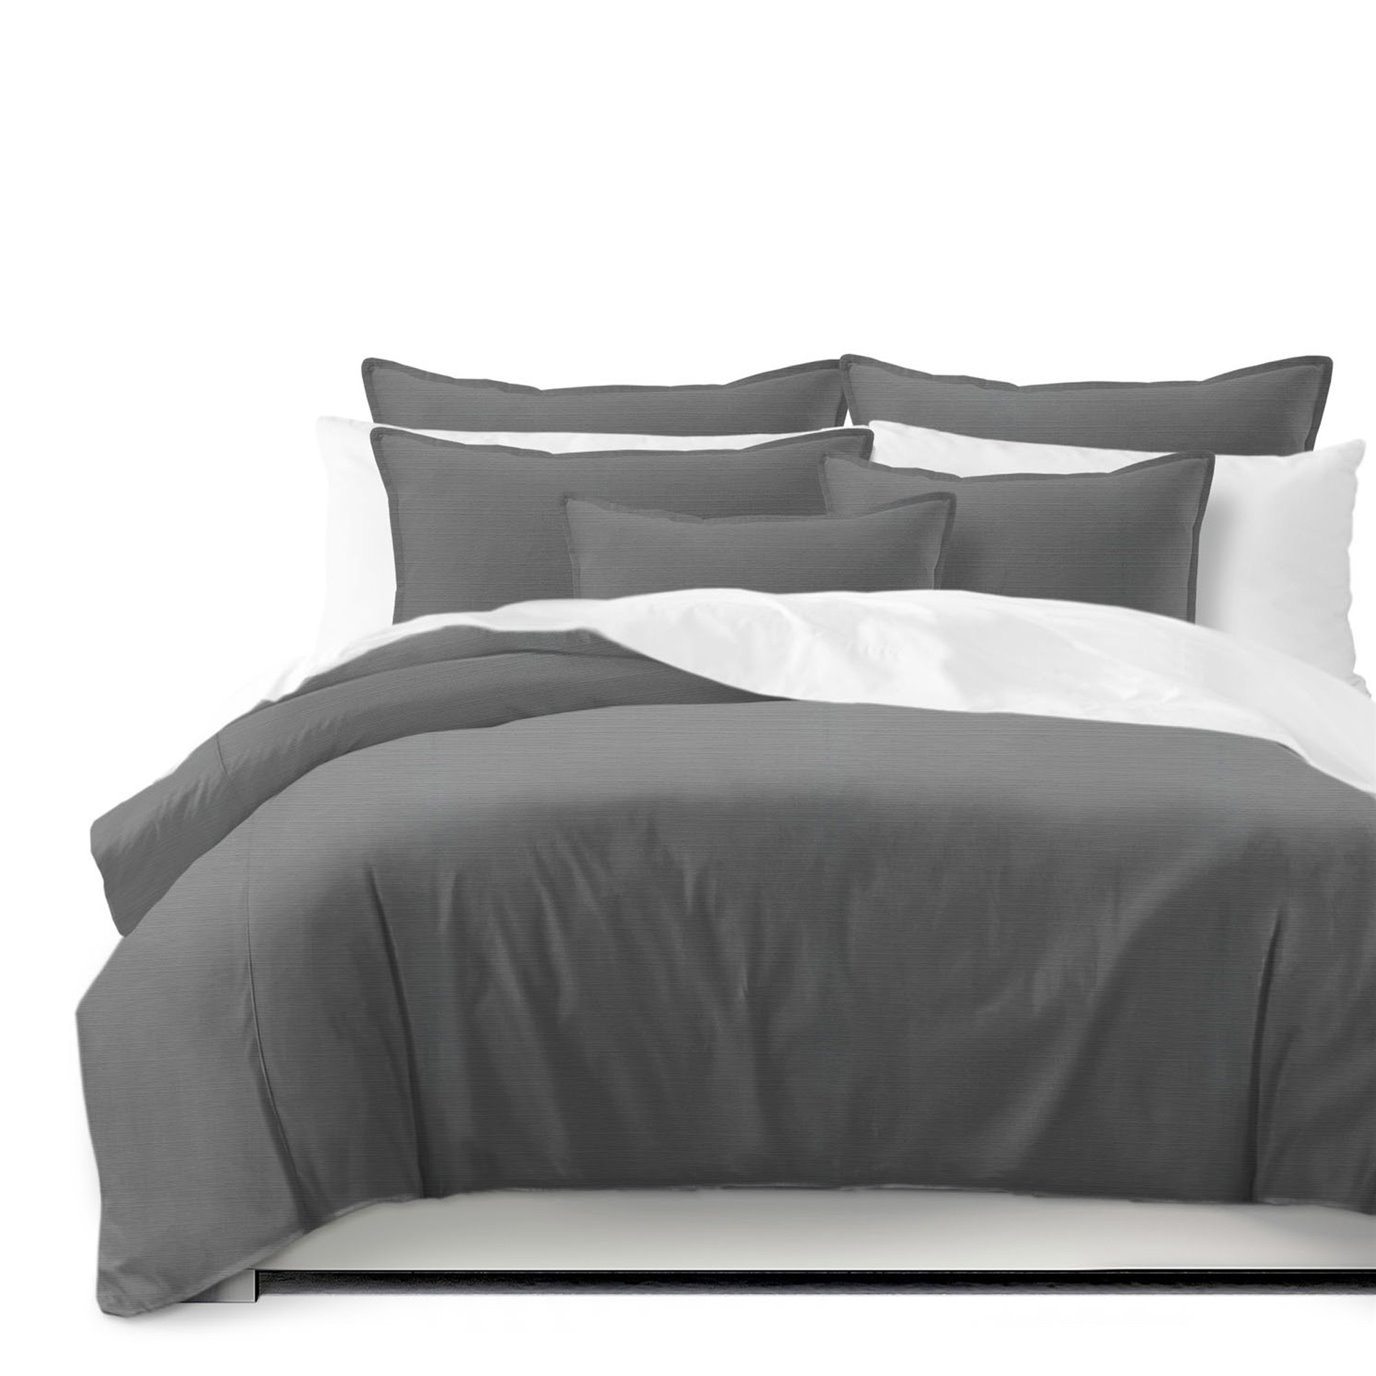 Nova Charcoal Duvet Cover and Pillow Sham(s) Set - Size Twin